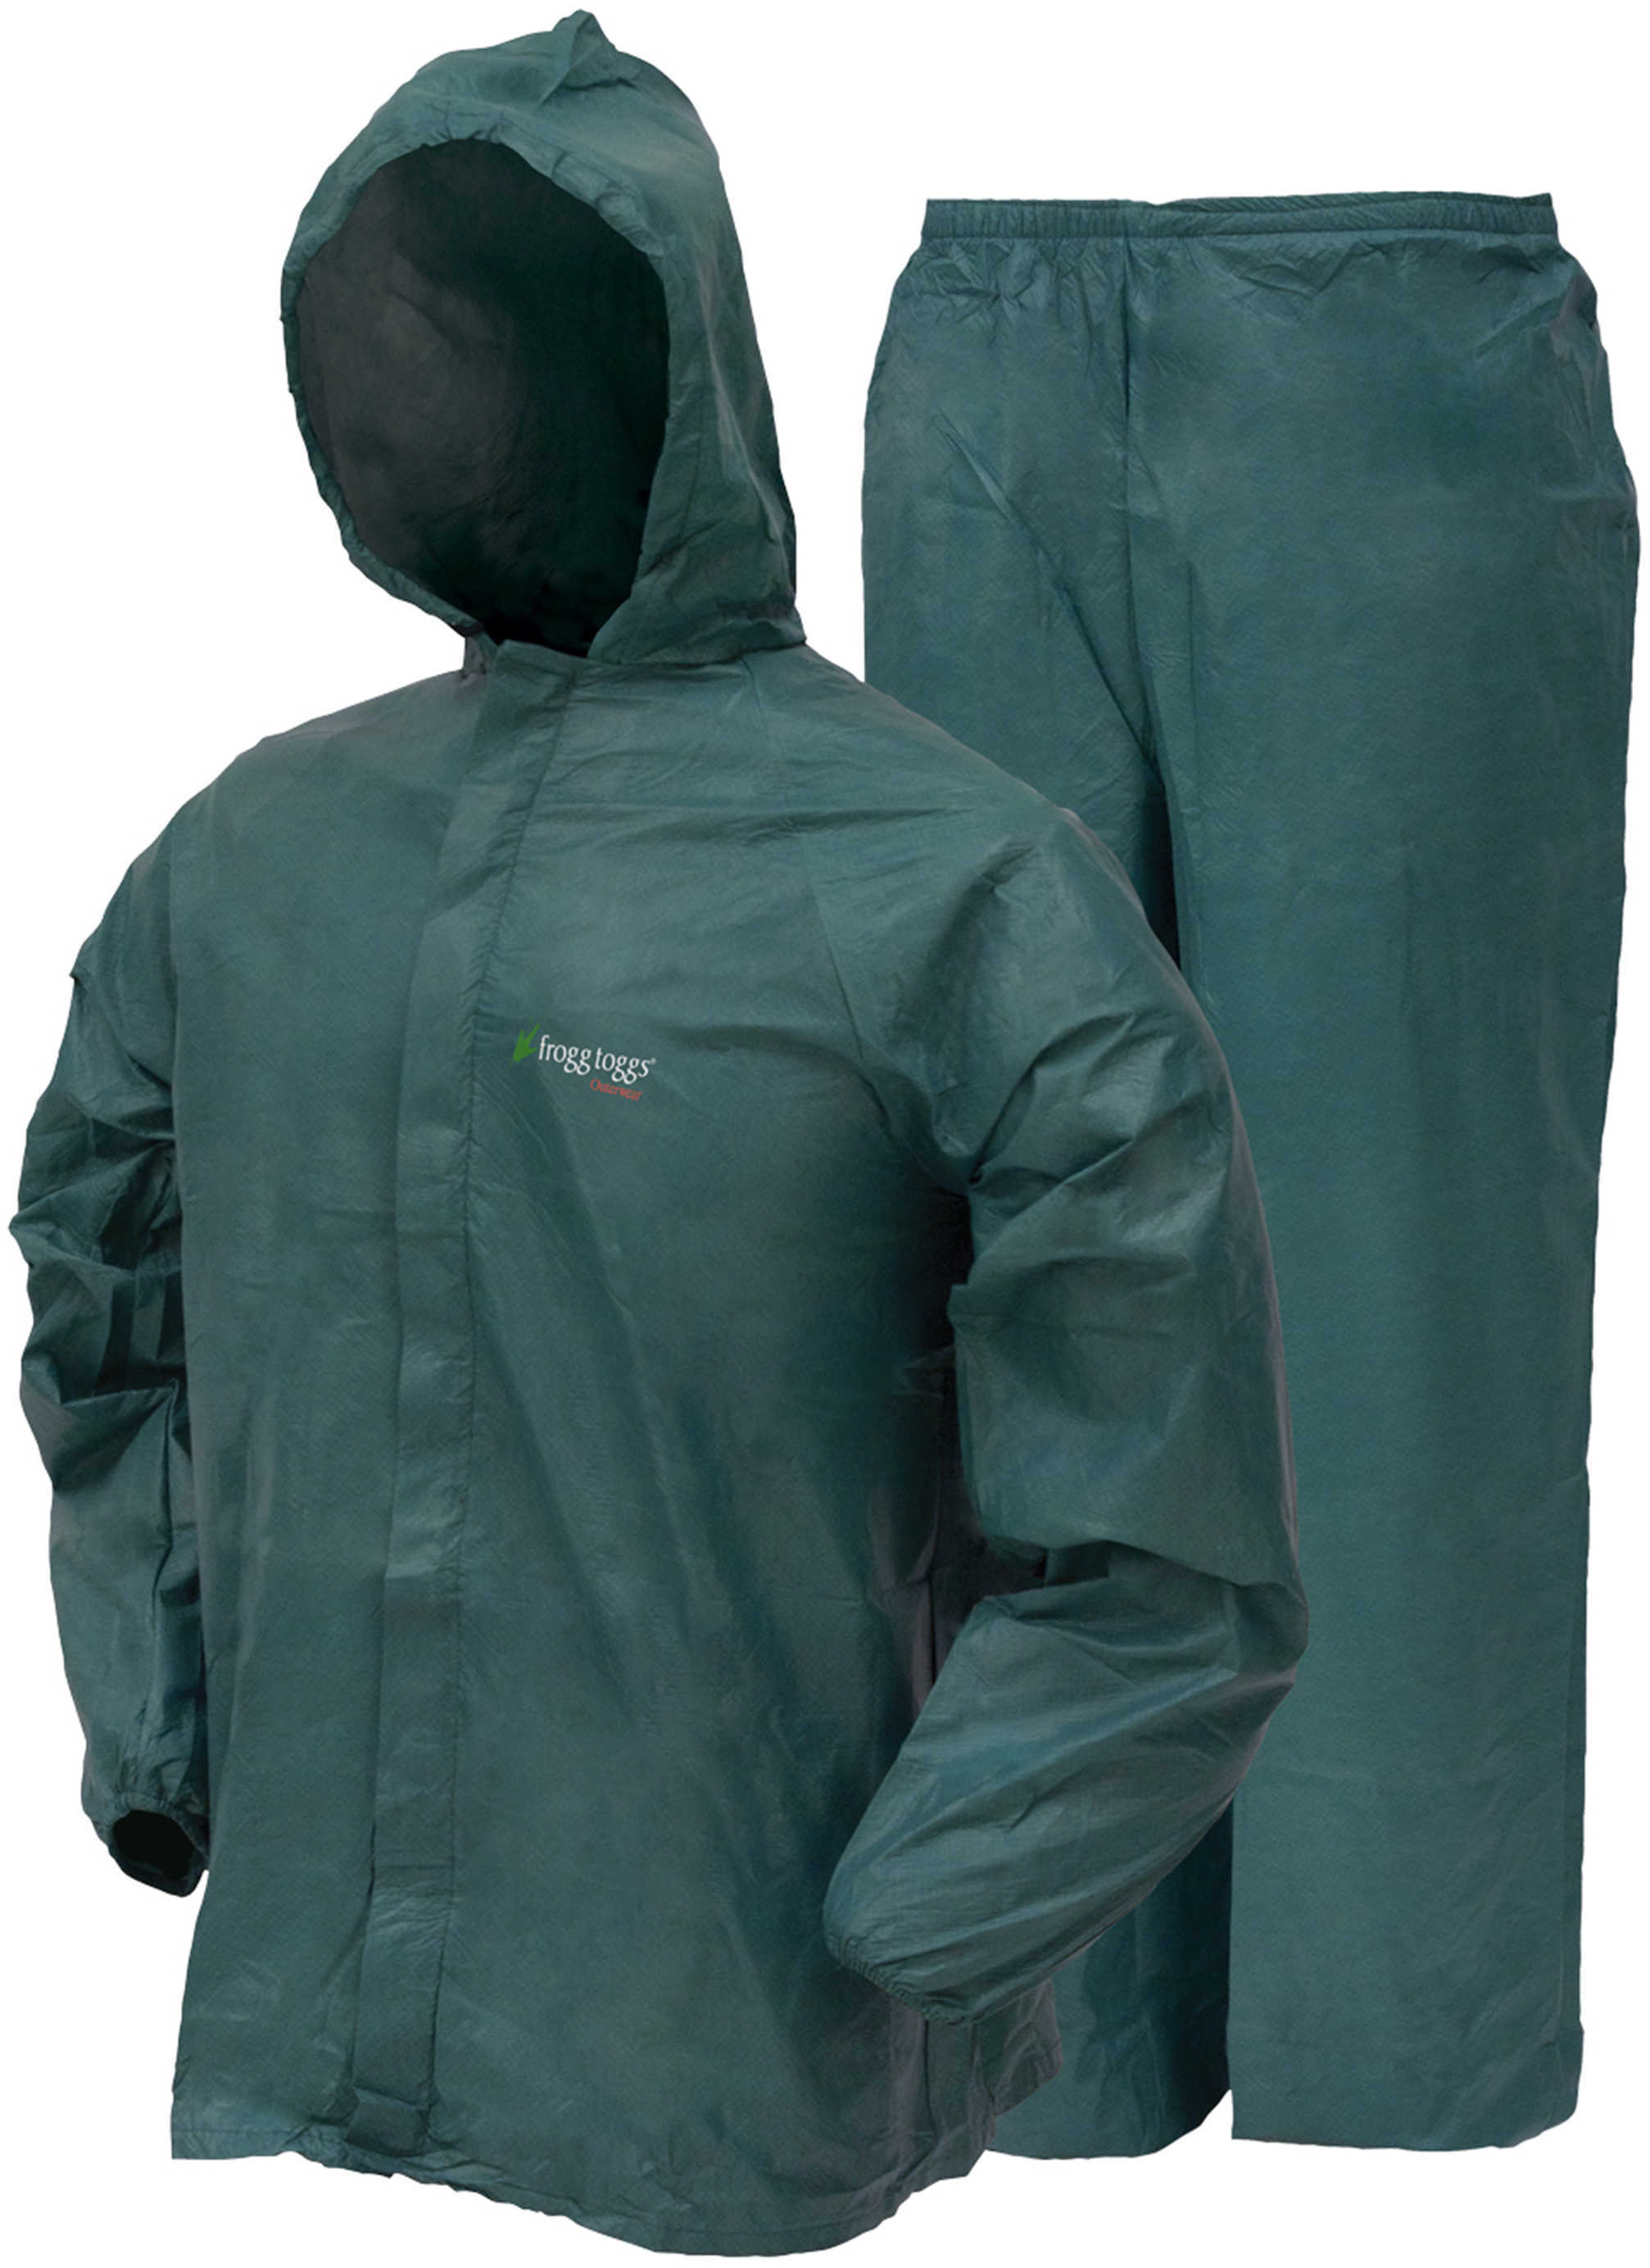 Frogg Toggs Ultra-Lite2 Rain Suit w/Stuff Sack X-Large, Green UL12104-09XL